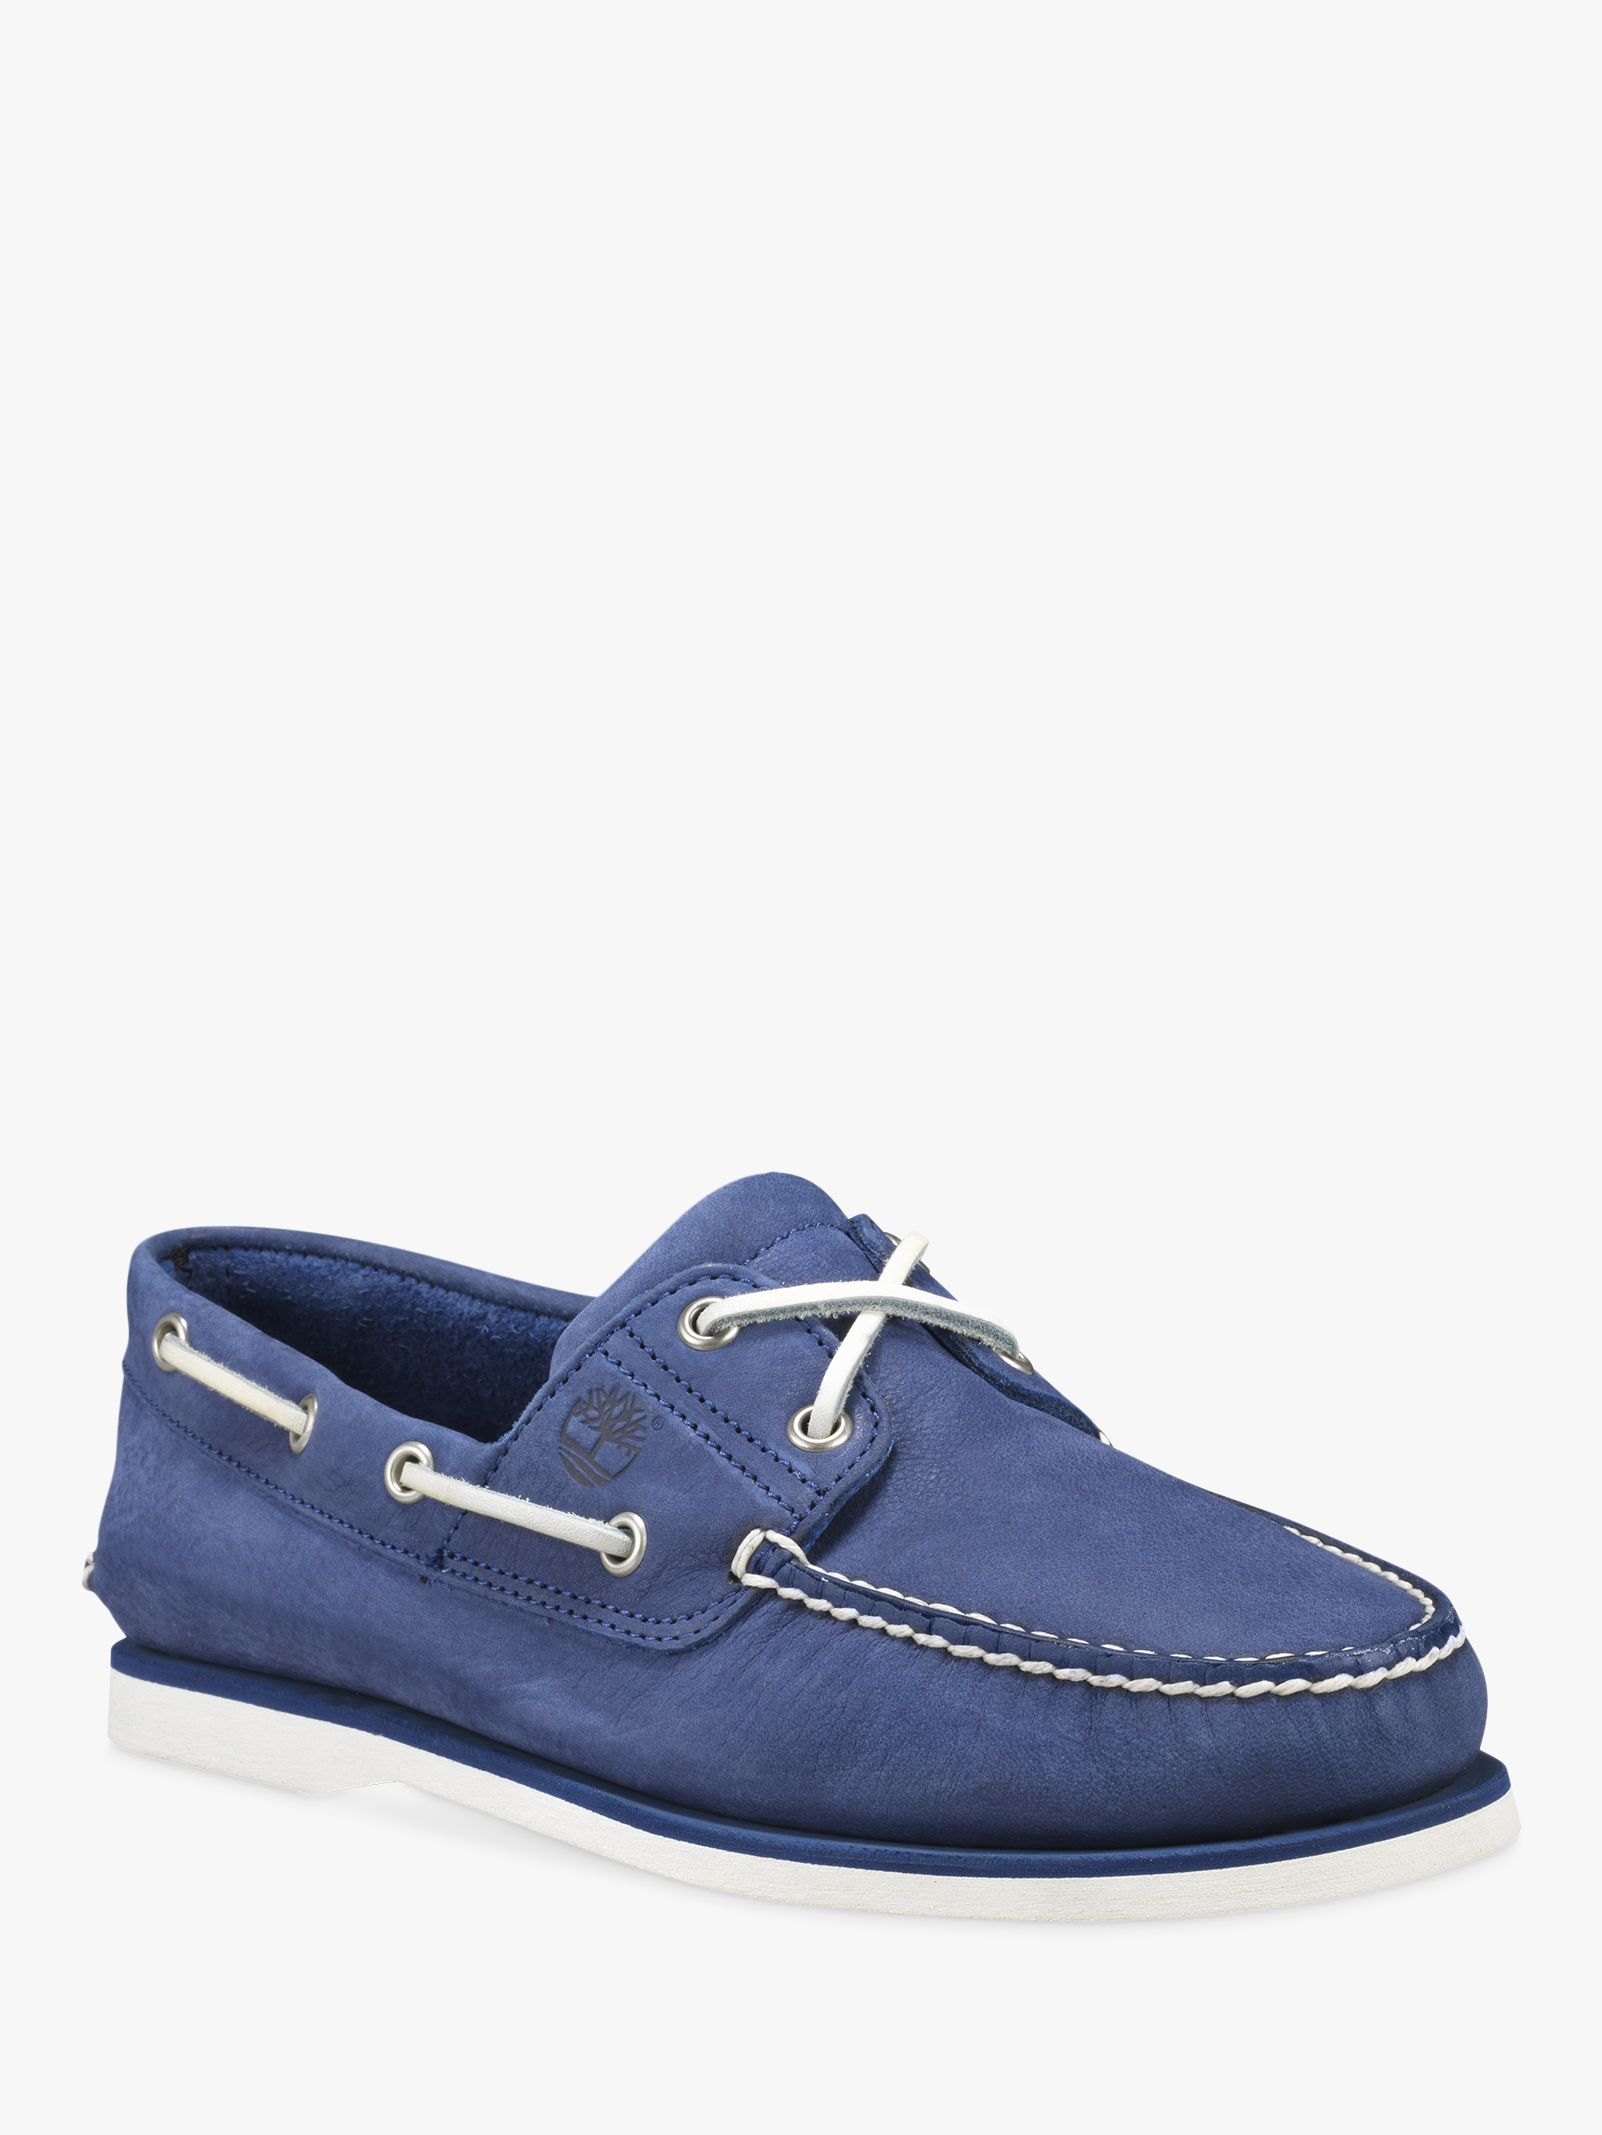 denim boat shoes